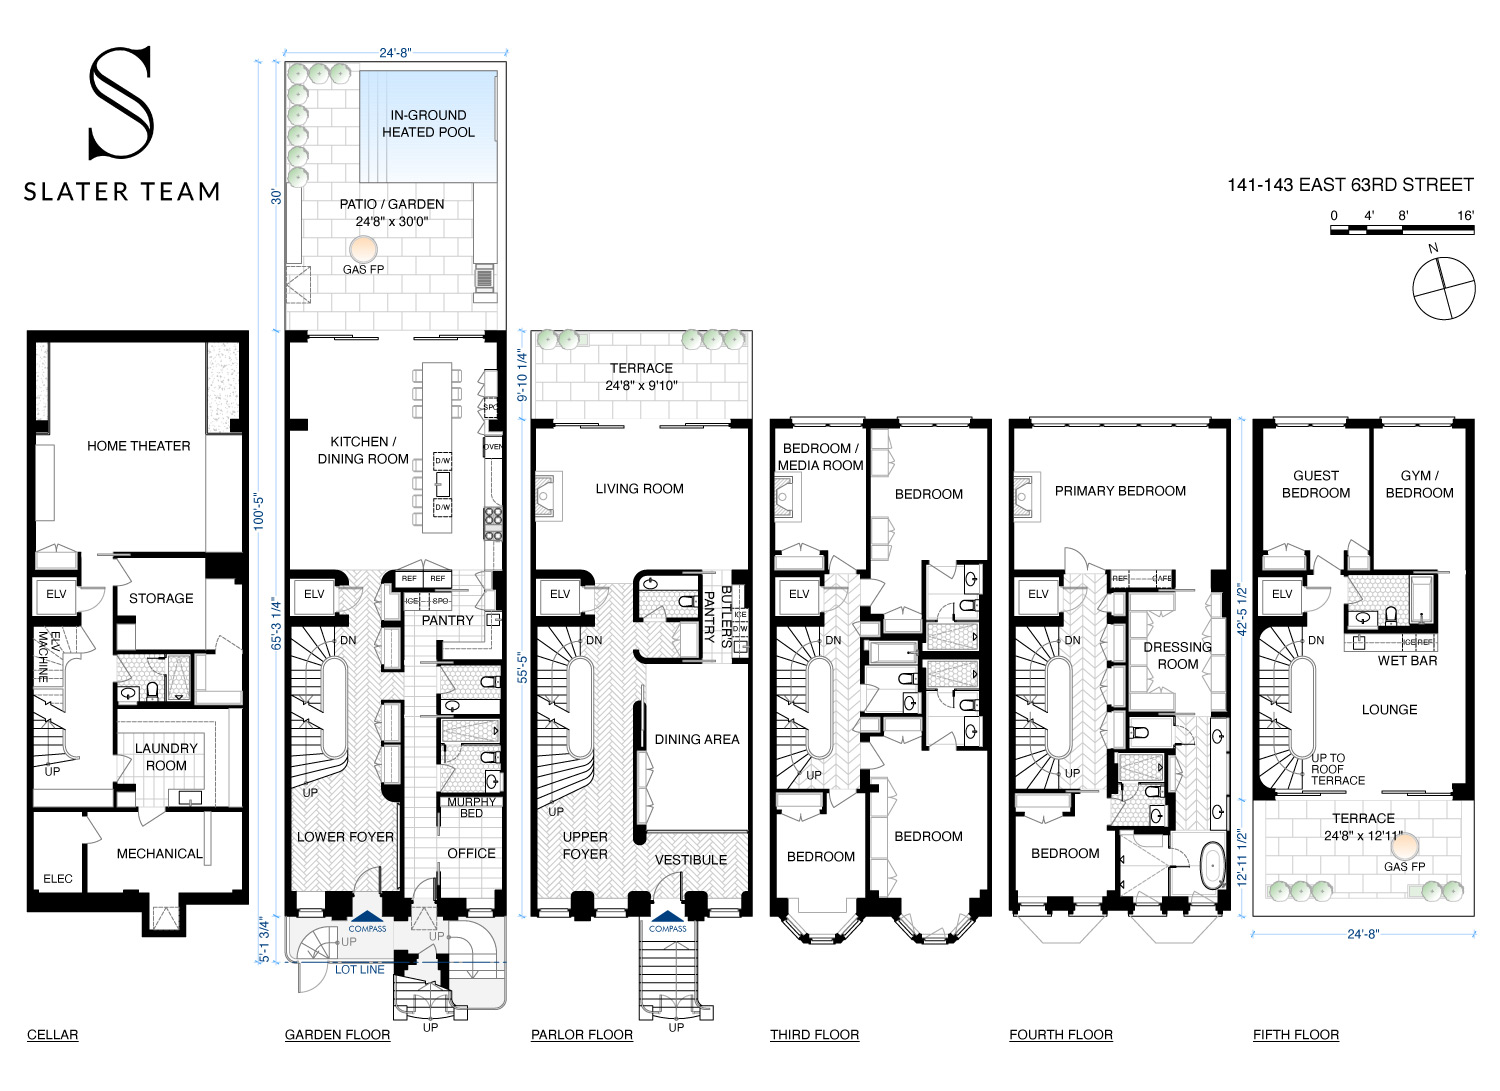 Floorplan for 141 East 63rd Street